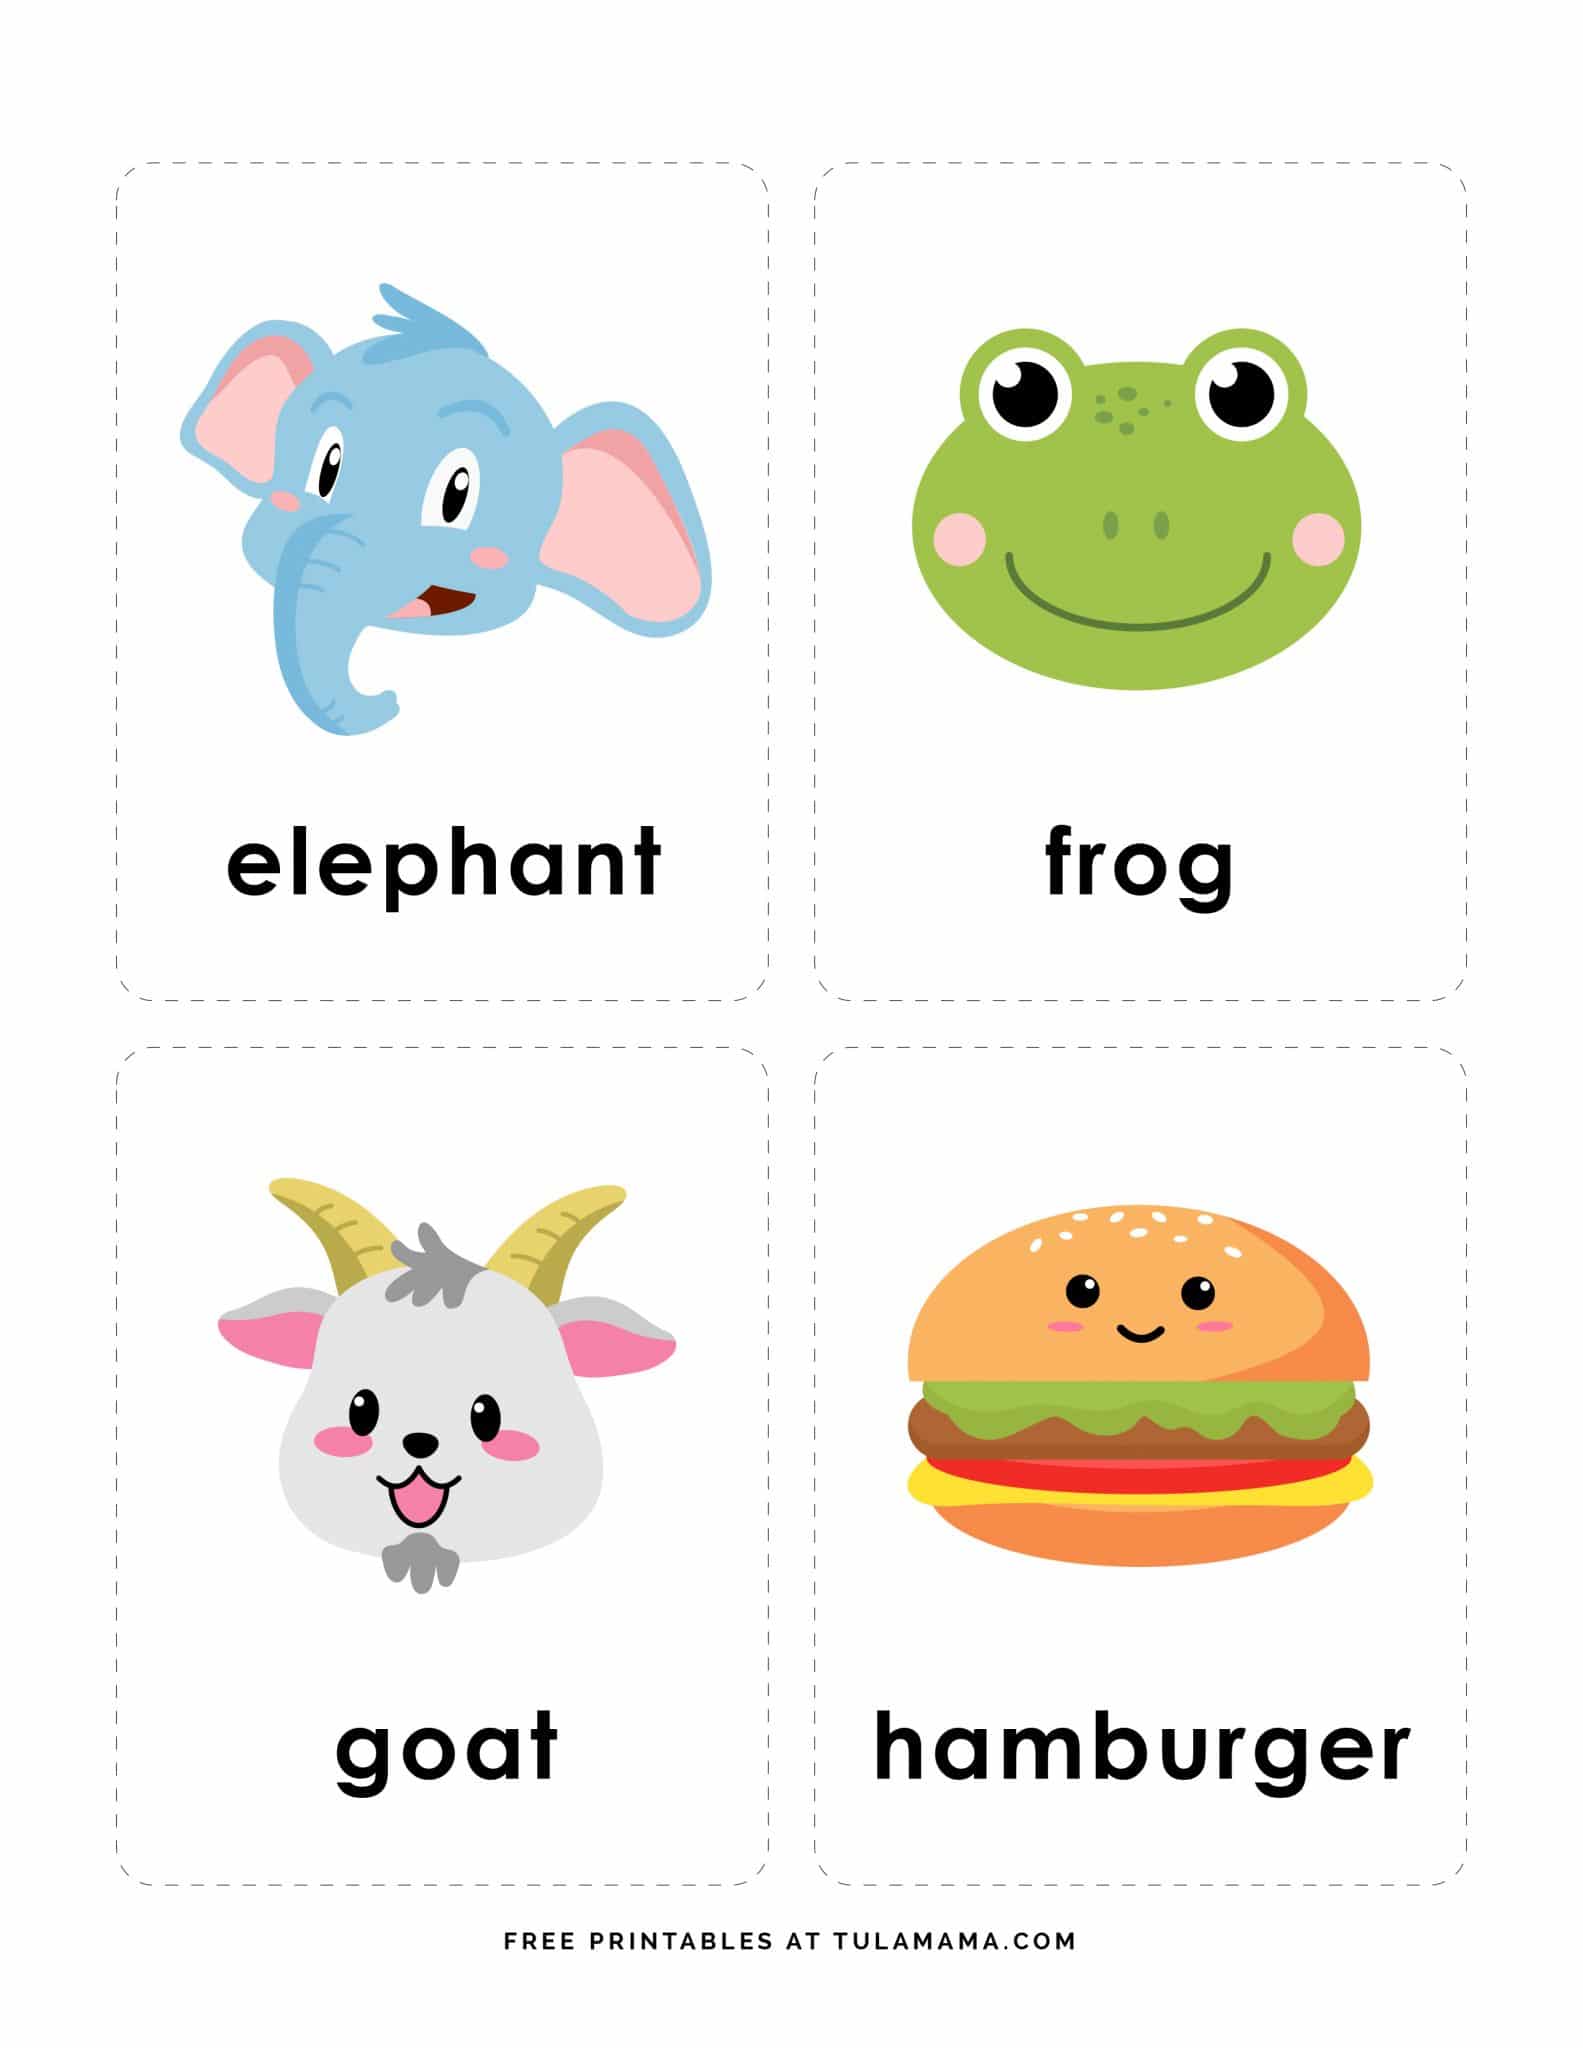 fun-free-engaging-alphabet-flash-cards-for-preschoolers-tulamama